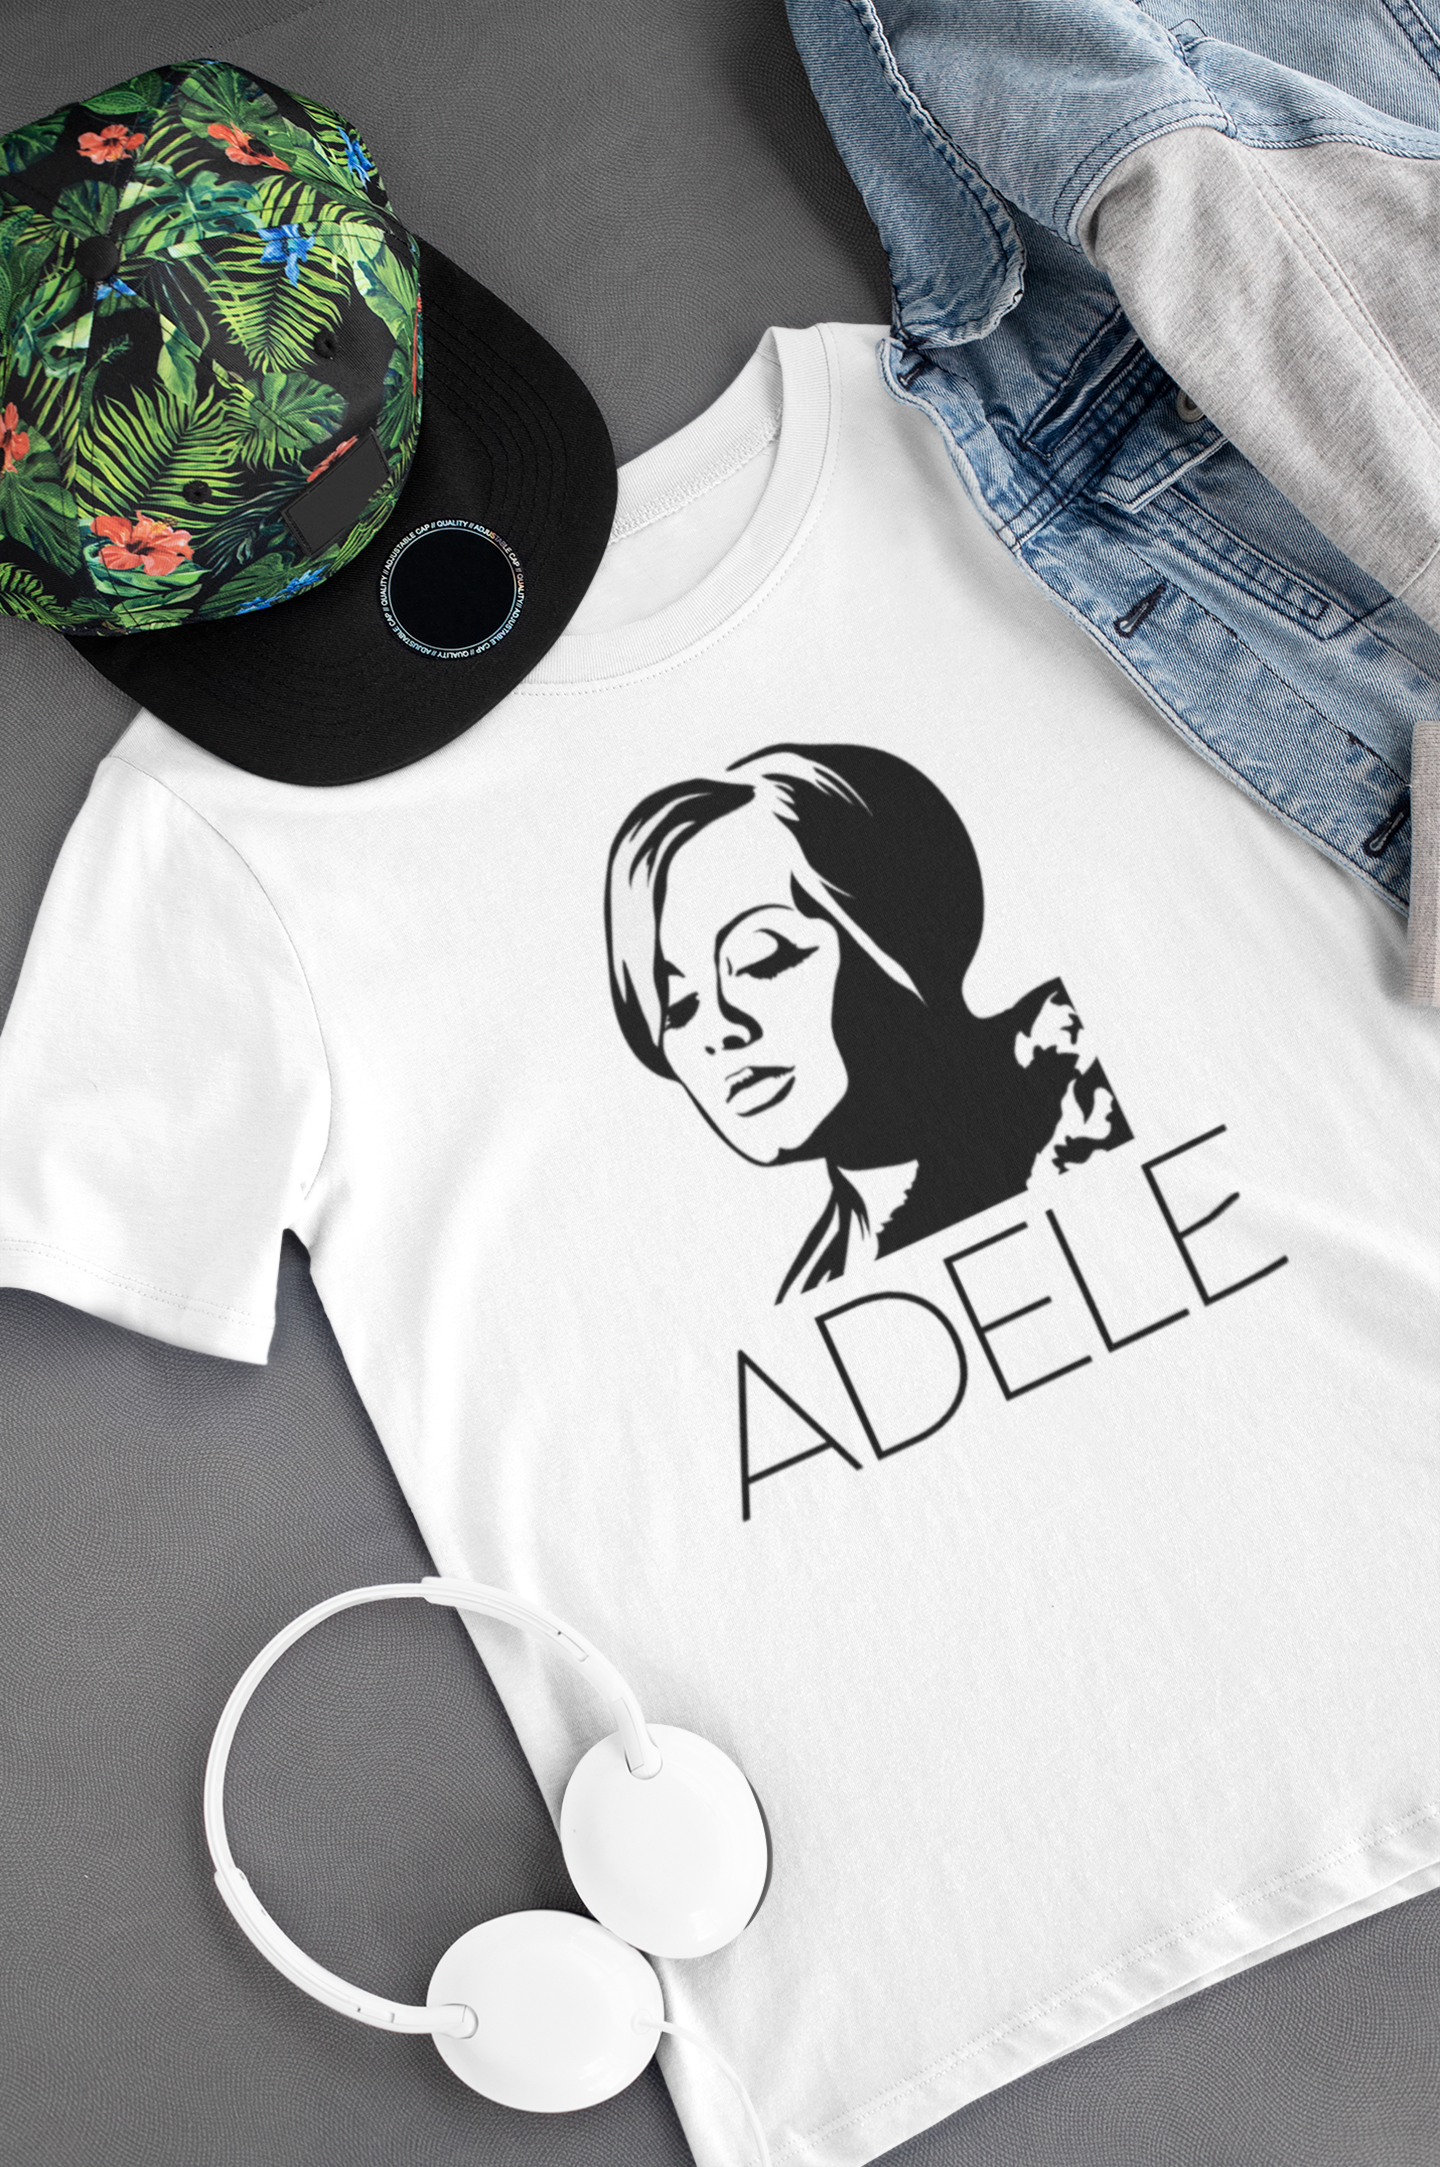 Camiseta "Adele" Clássica - Música